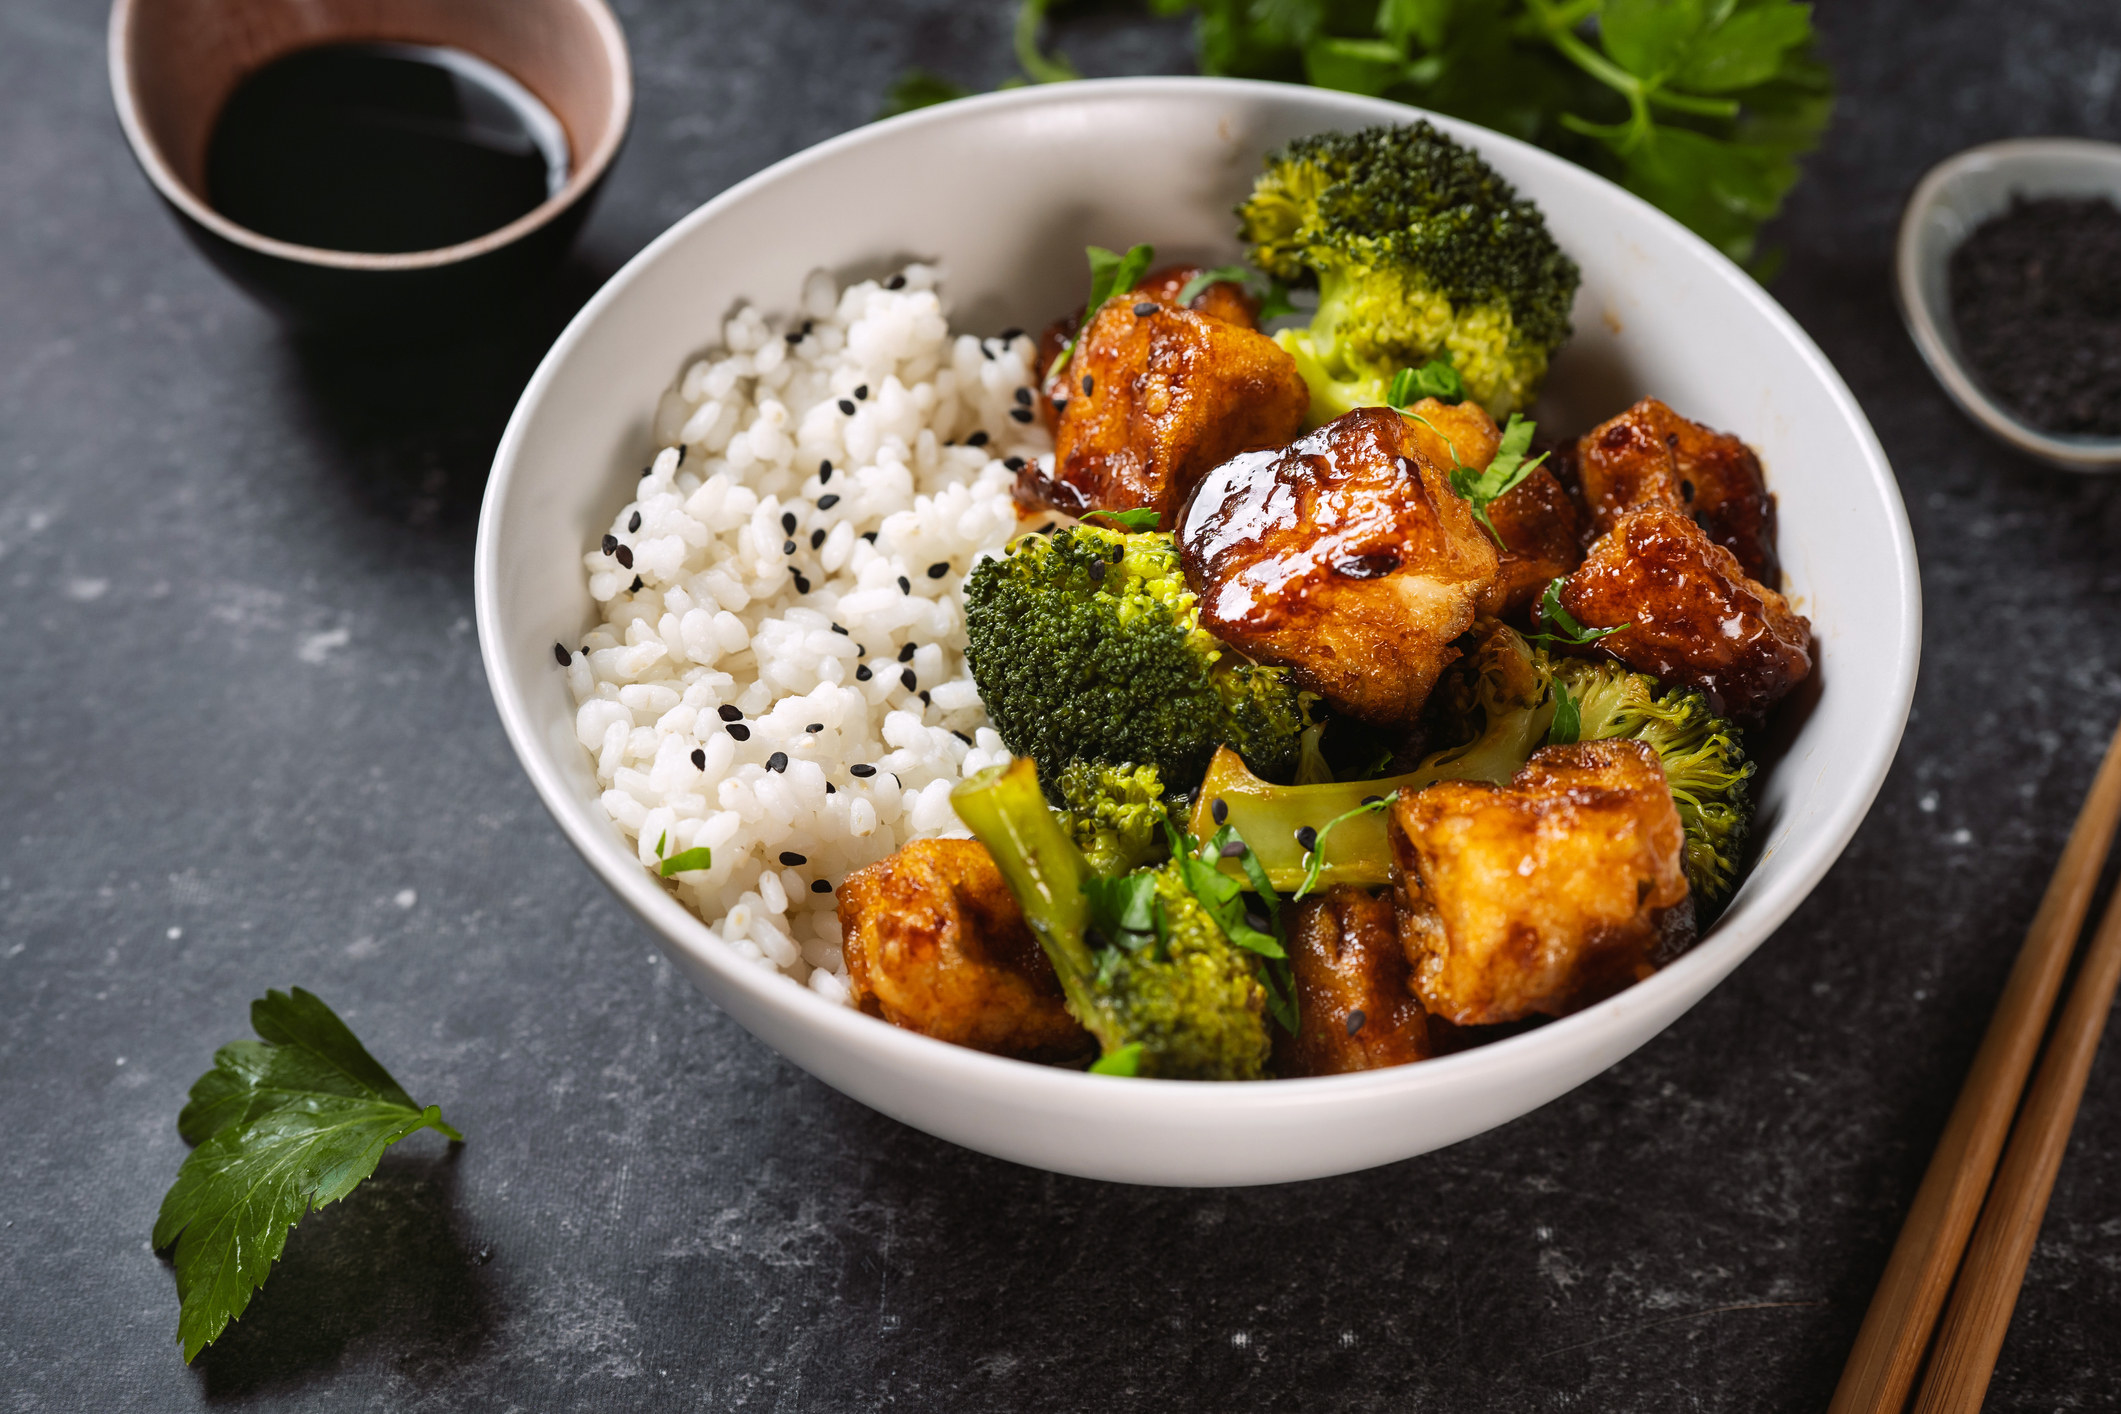 Broccoli and tofu with rice.